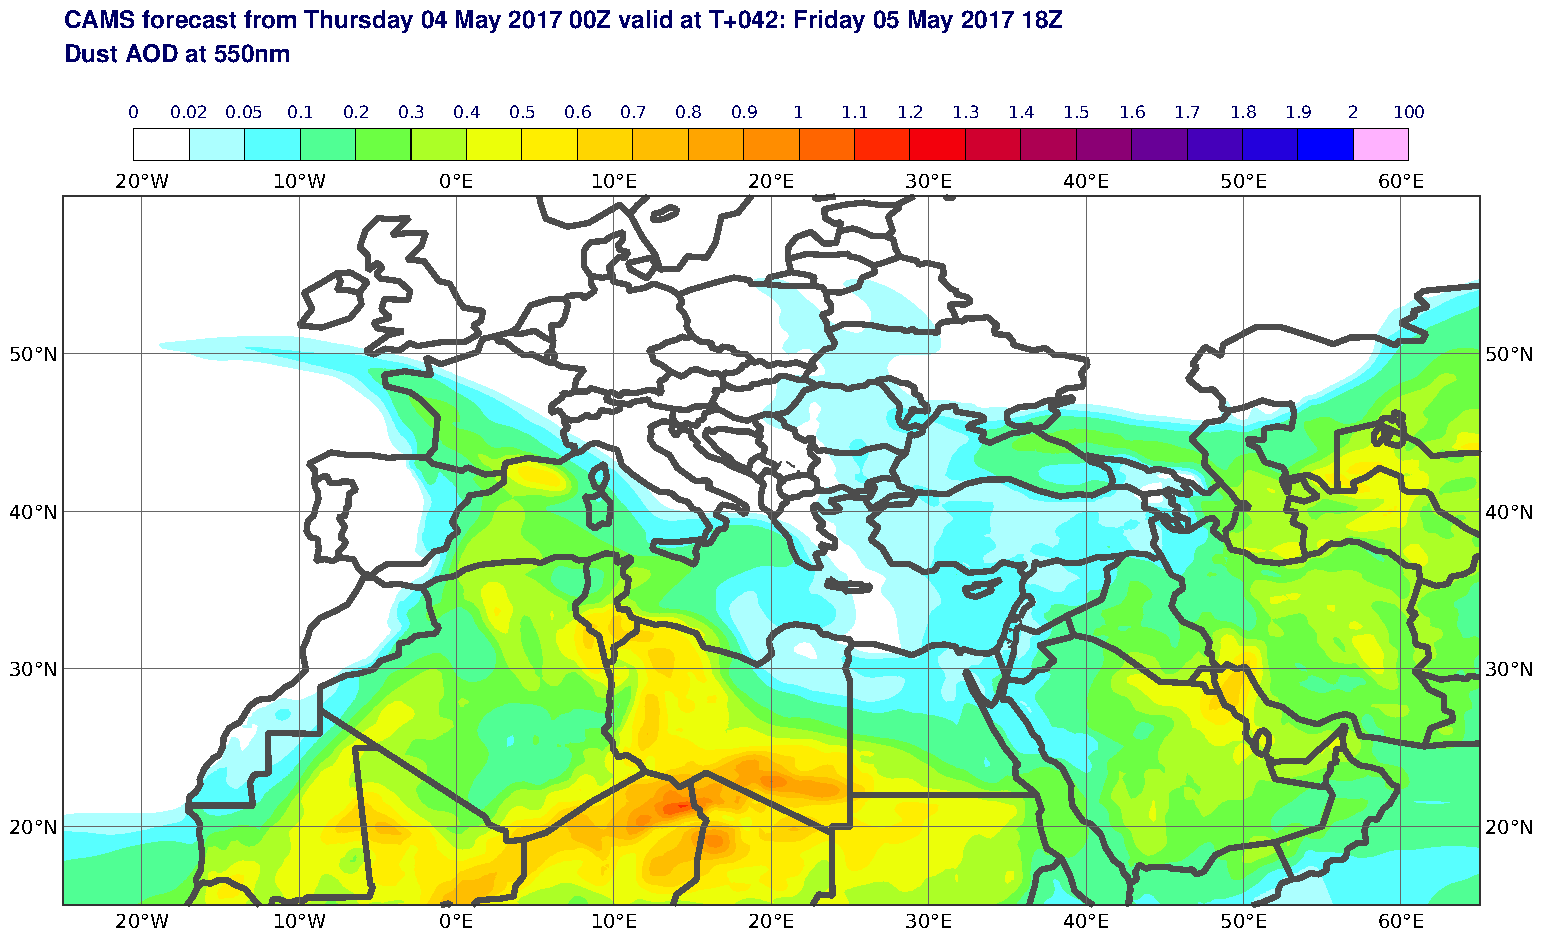 Dust AOD at 550nm valid at T42 - 2017-05-05 18:00